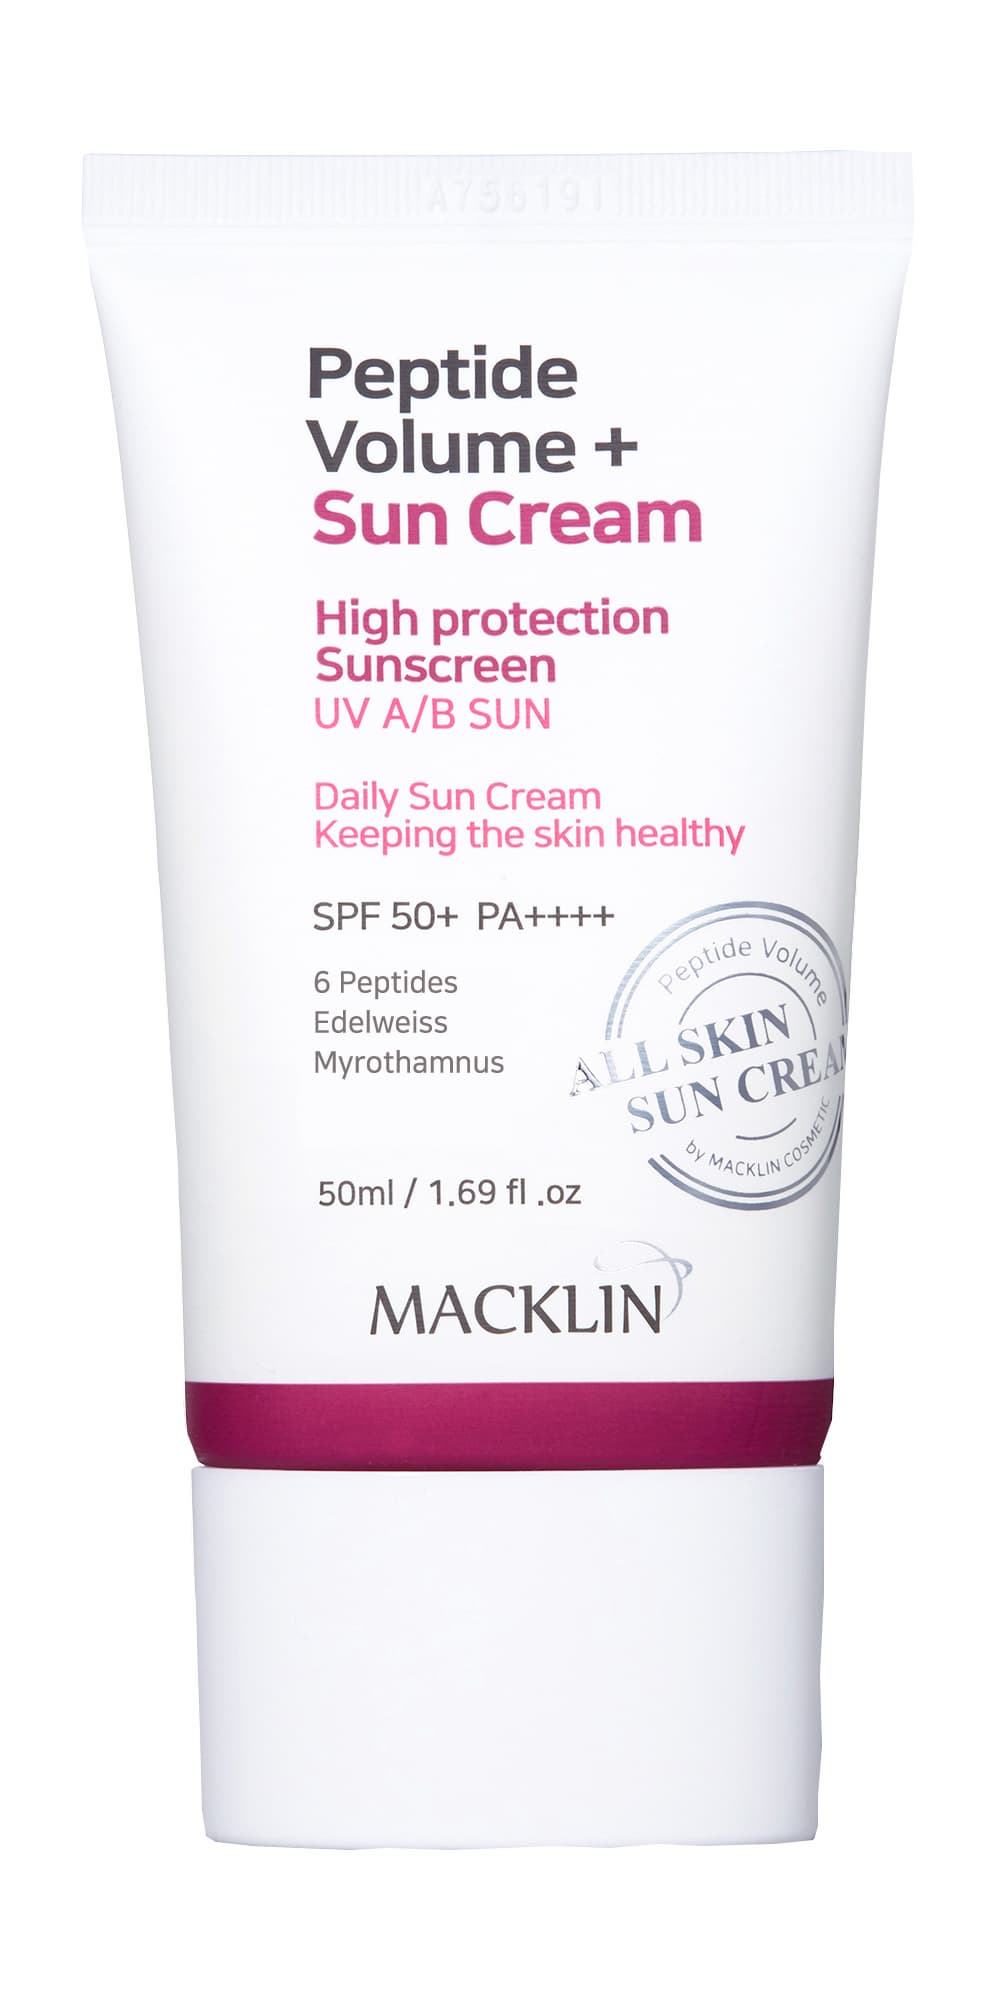 Peptide Suncream Korea Skin care Sunscreen